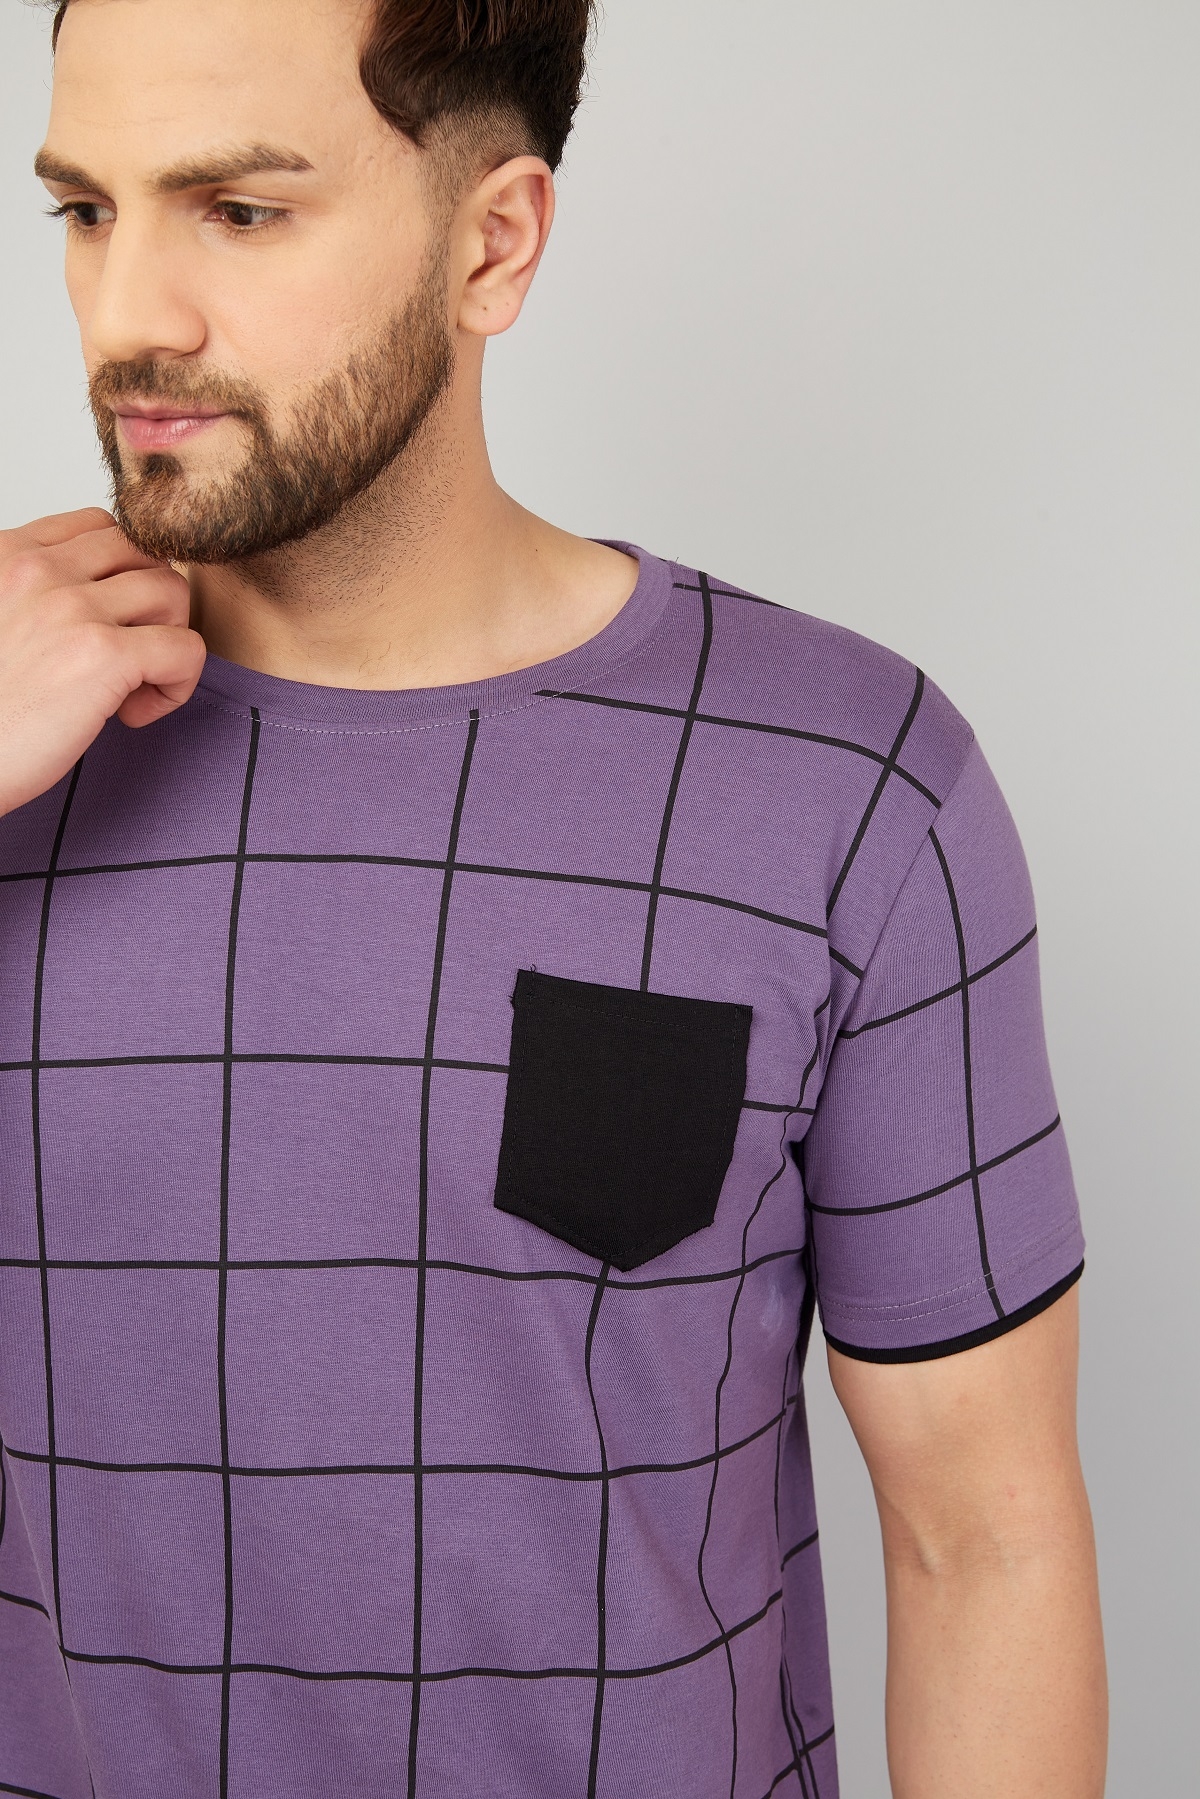 RodZen | Round neck Half Sleeve Purple All Over Printed Cotton Tshirt For Men & Boys 2